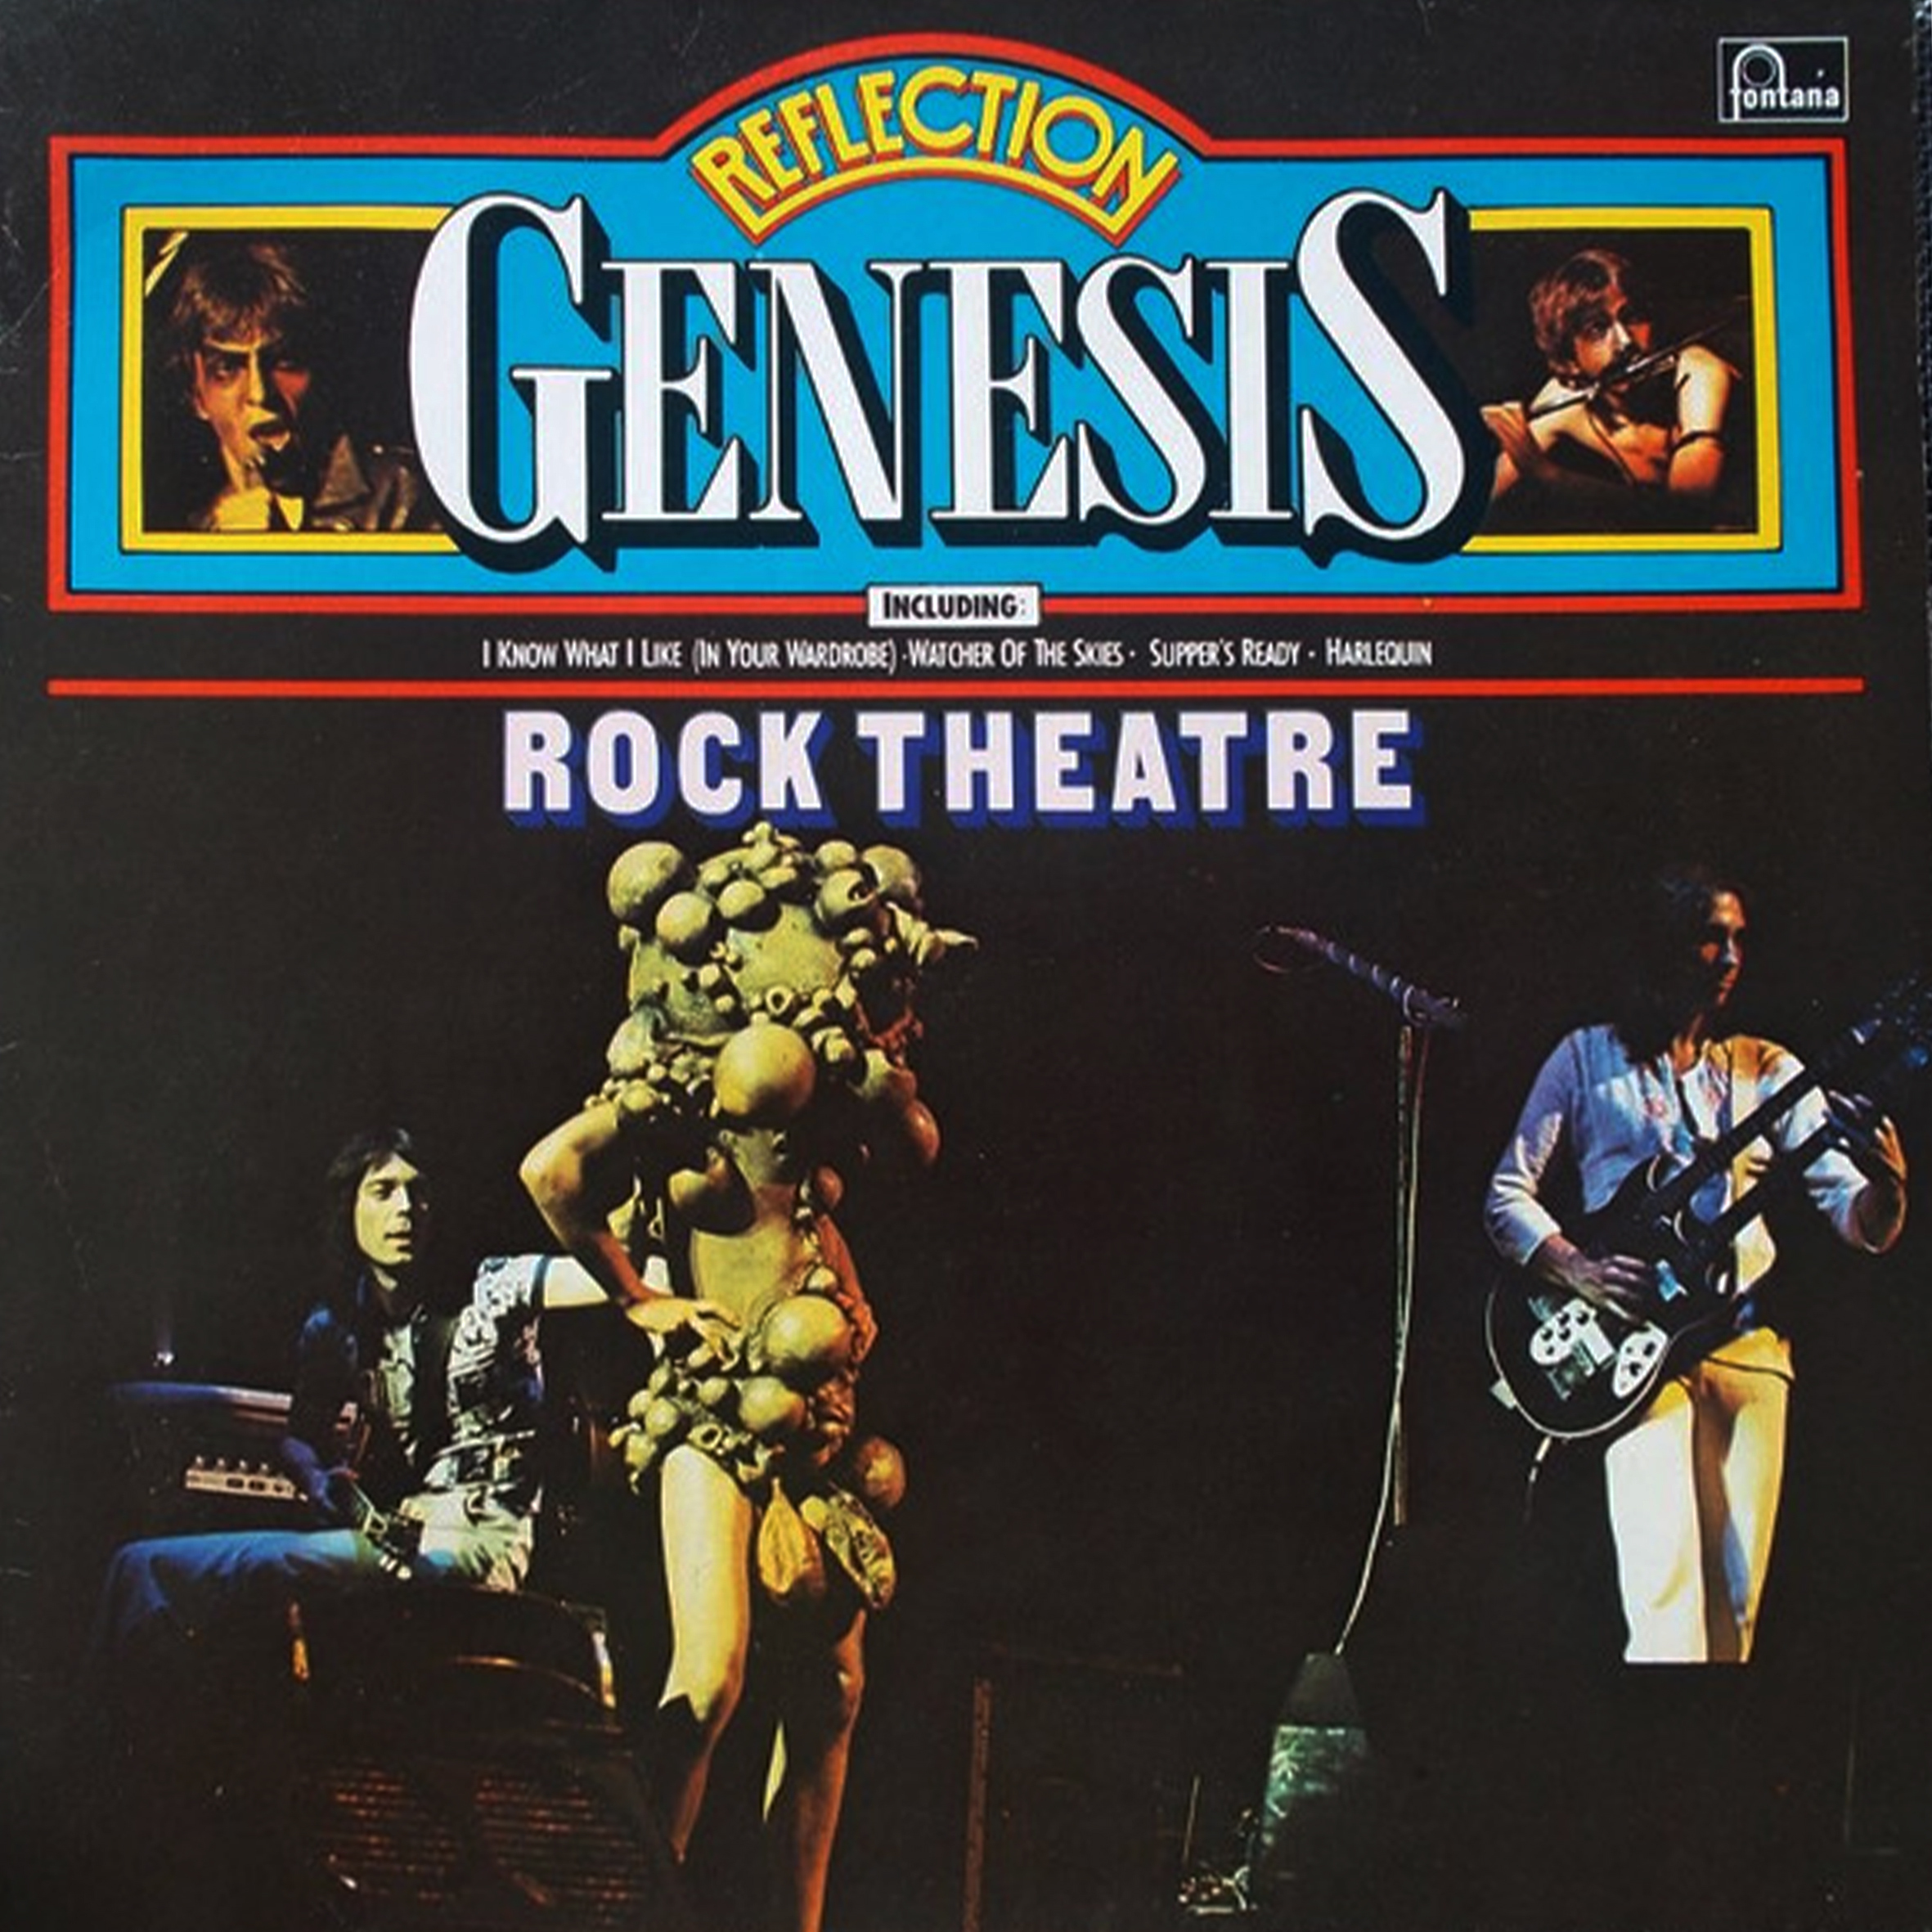 Vinil - Genesis - Reflection Vol 6 Rock Theatre